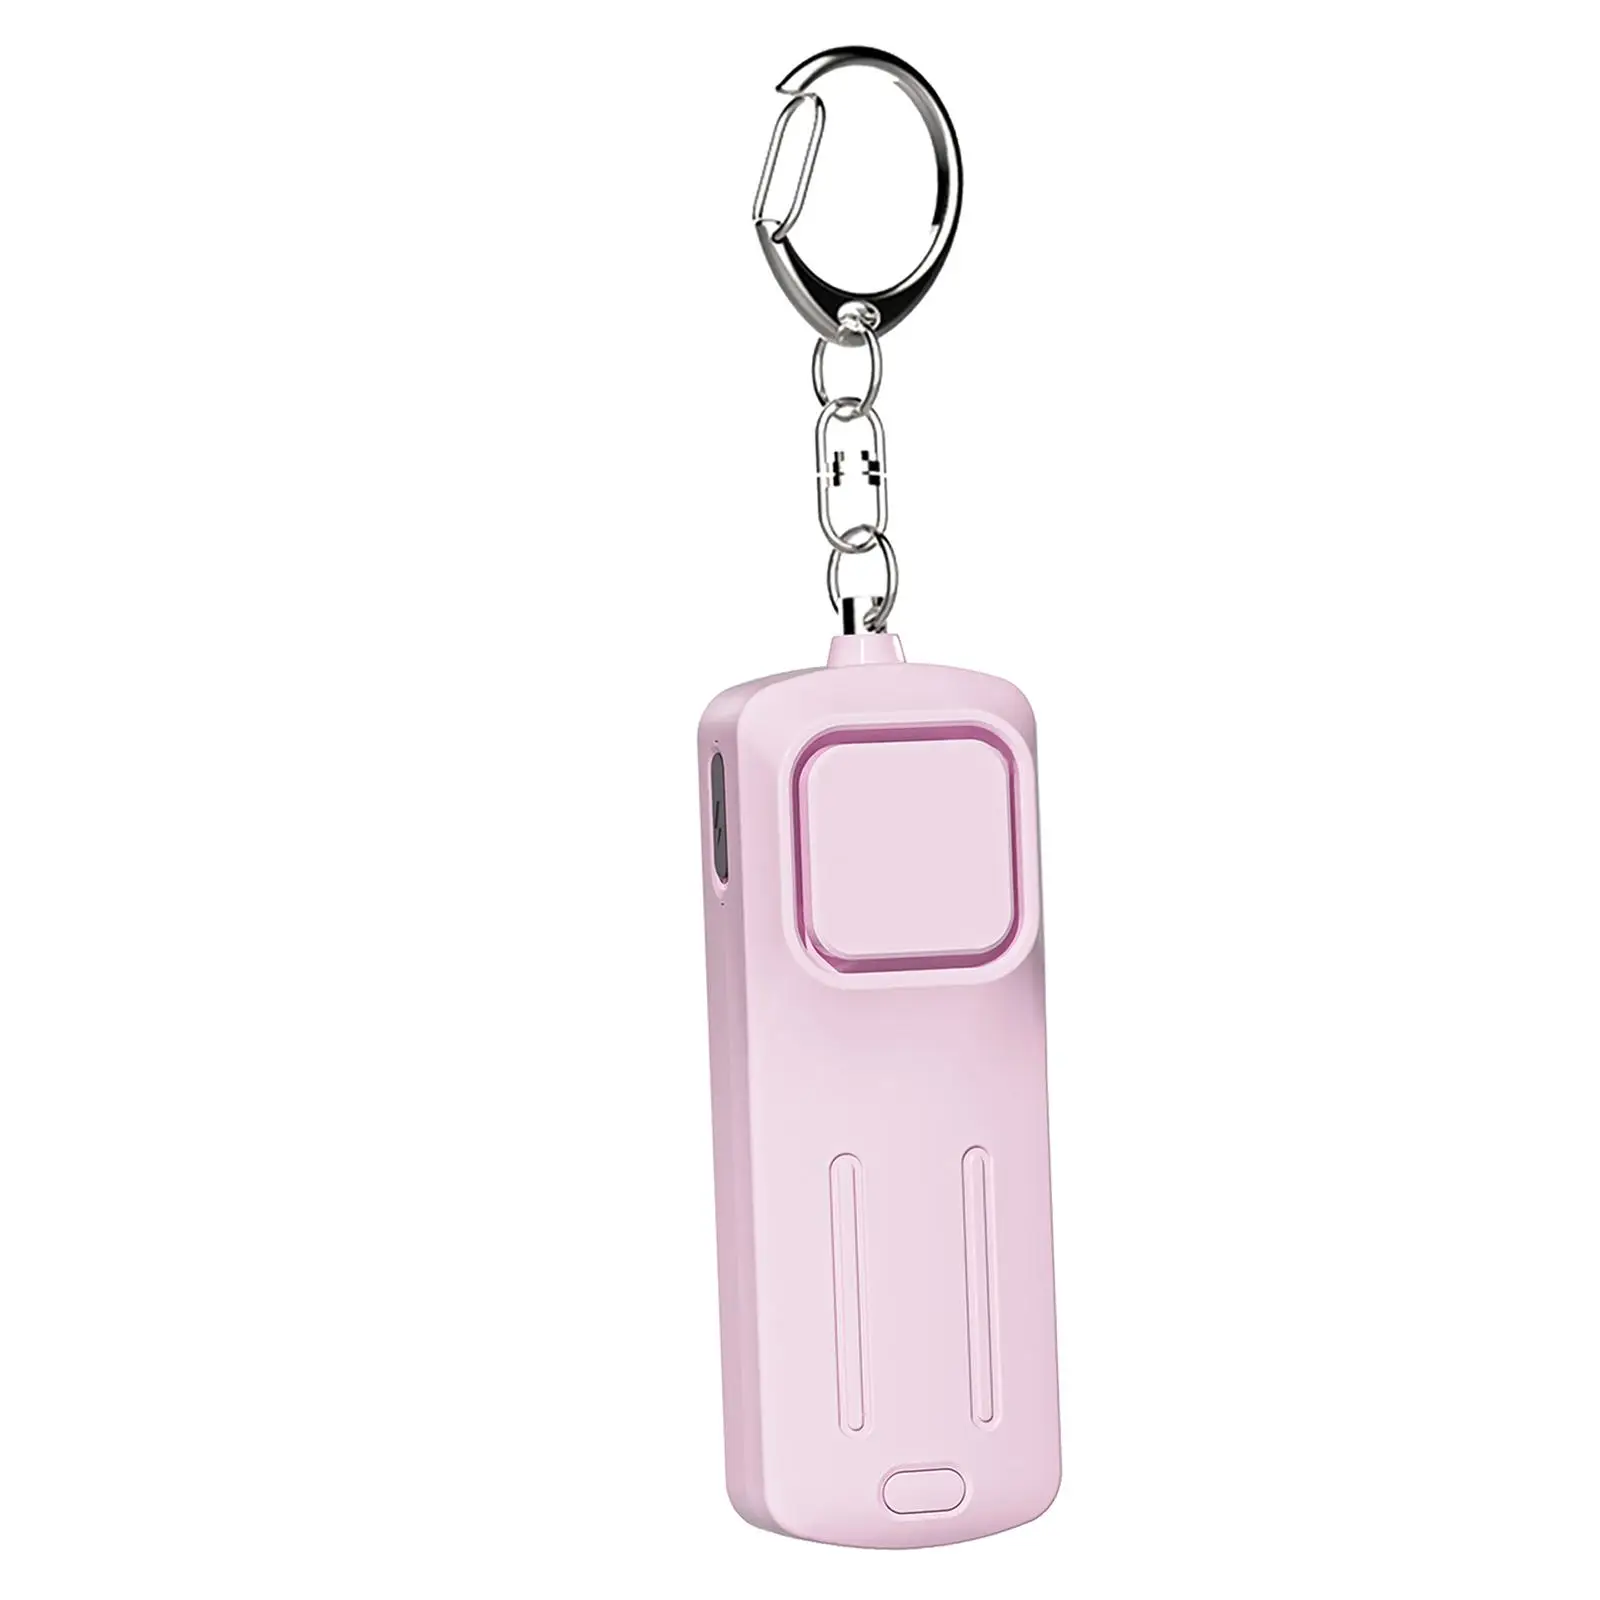 Personal ty Alarm 130dB Mini with LED Flashlight Loud Siren Self Defense Alarm for Panic Family Women Children Elderly